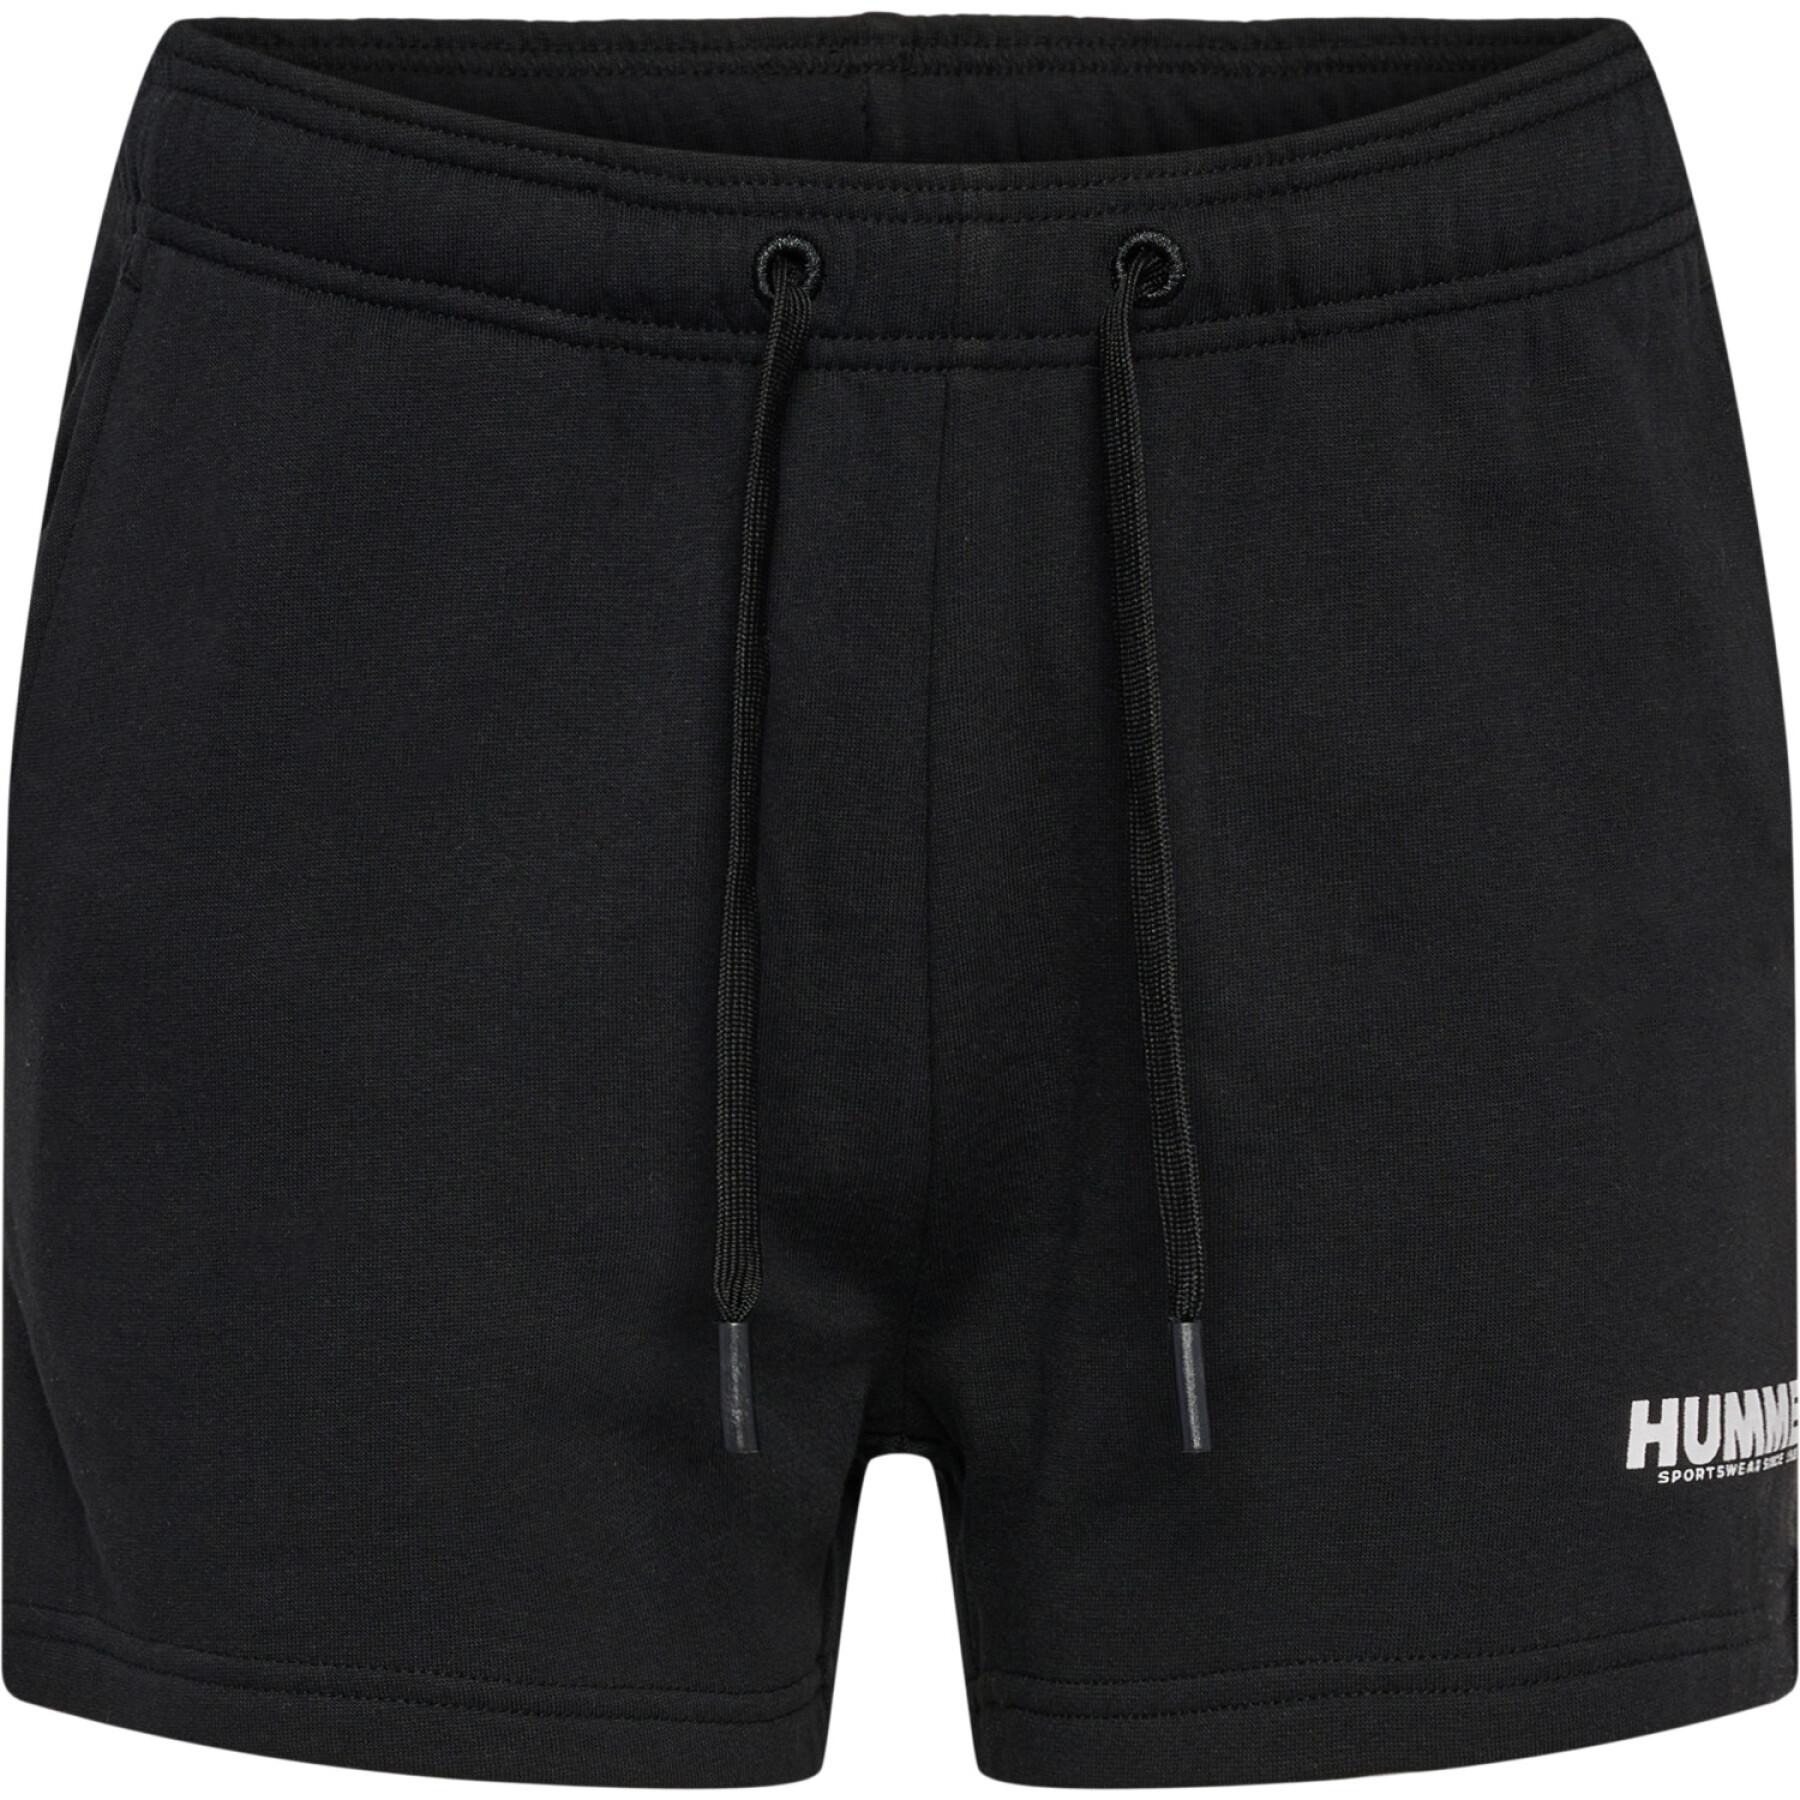 Lifestyle - - shorts Hummel Hummel Legacy Brands Women\'s -